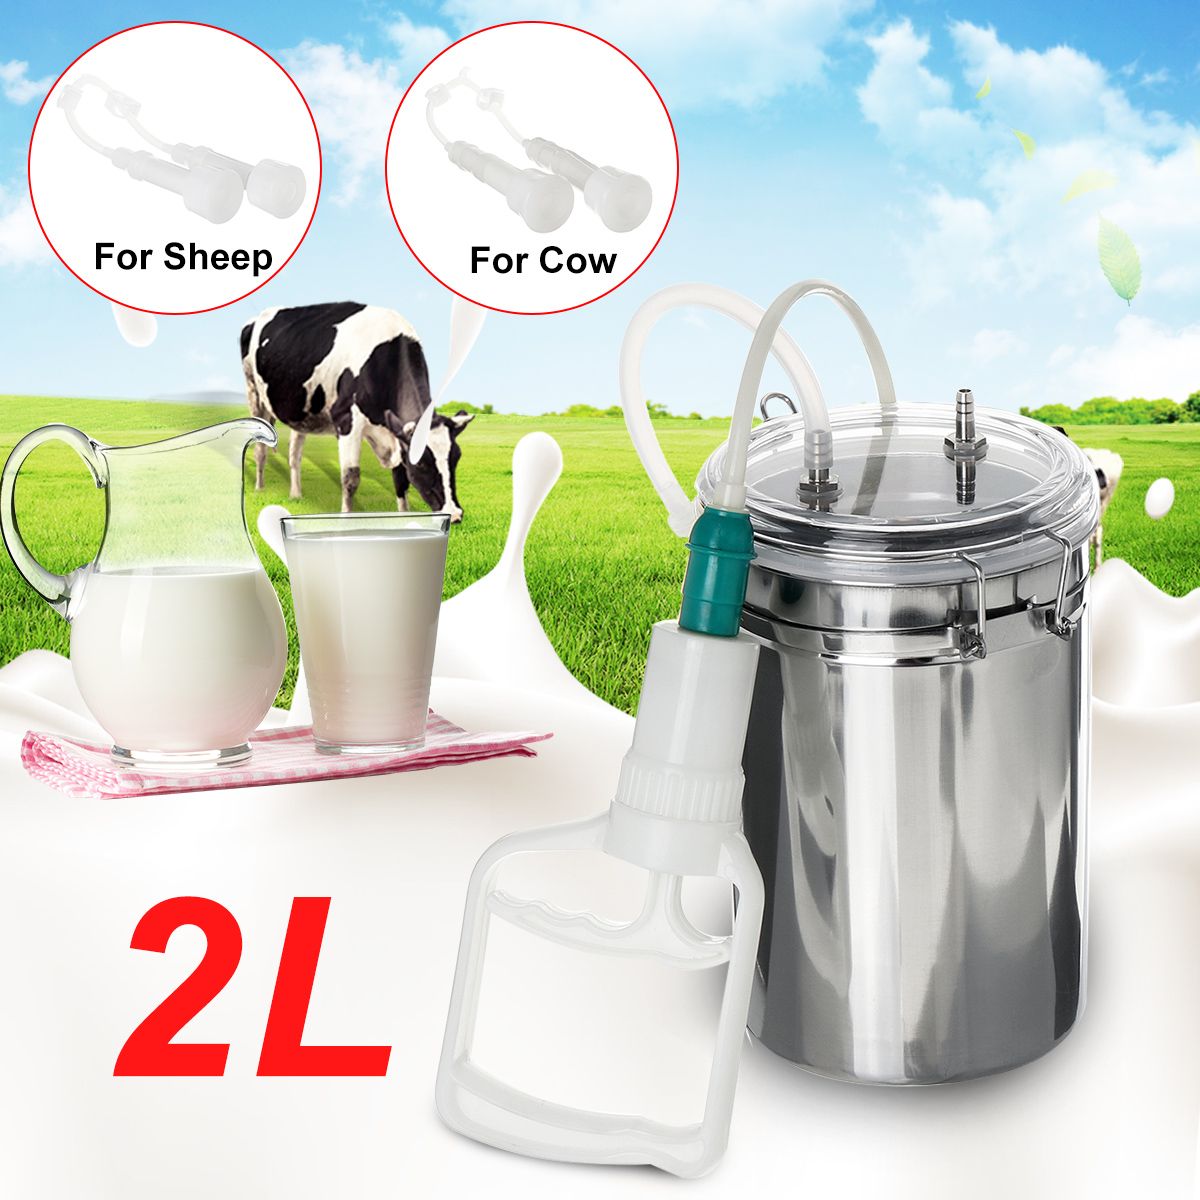 2L-2-Heads-Portable-Manual-Milking-Machine-Milker-Cow-Sheep-Goat-Milking-Machine-1745649